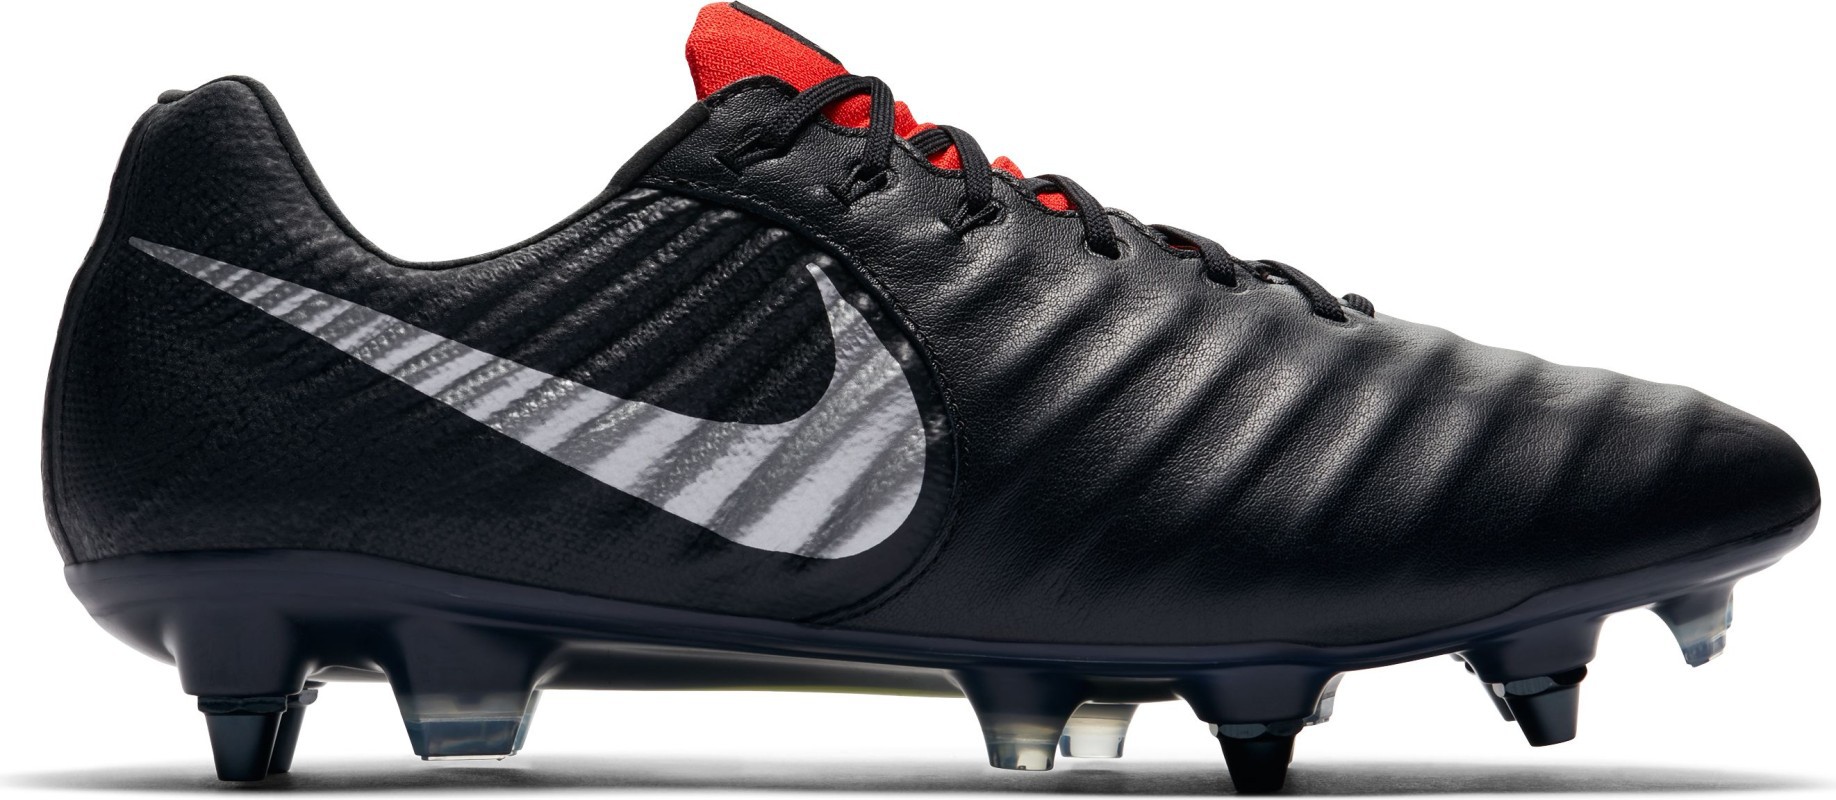 Football boots Nike Legend VII Elite SG Pro Raised On Concrete Pack colore Black Silver - Nike - SportIT.com